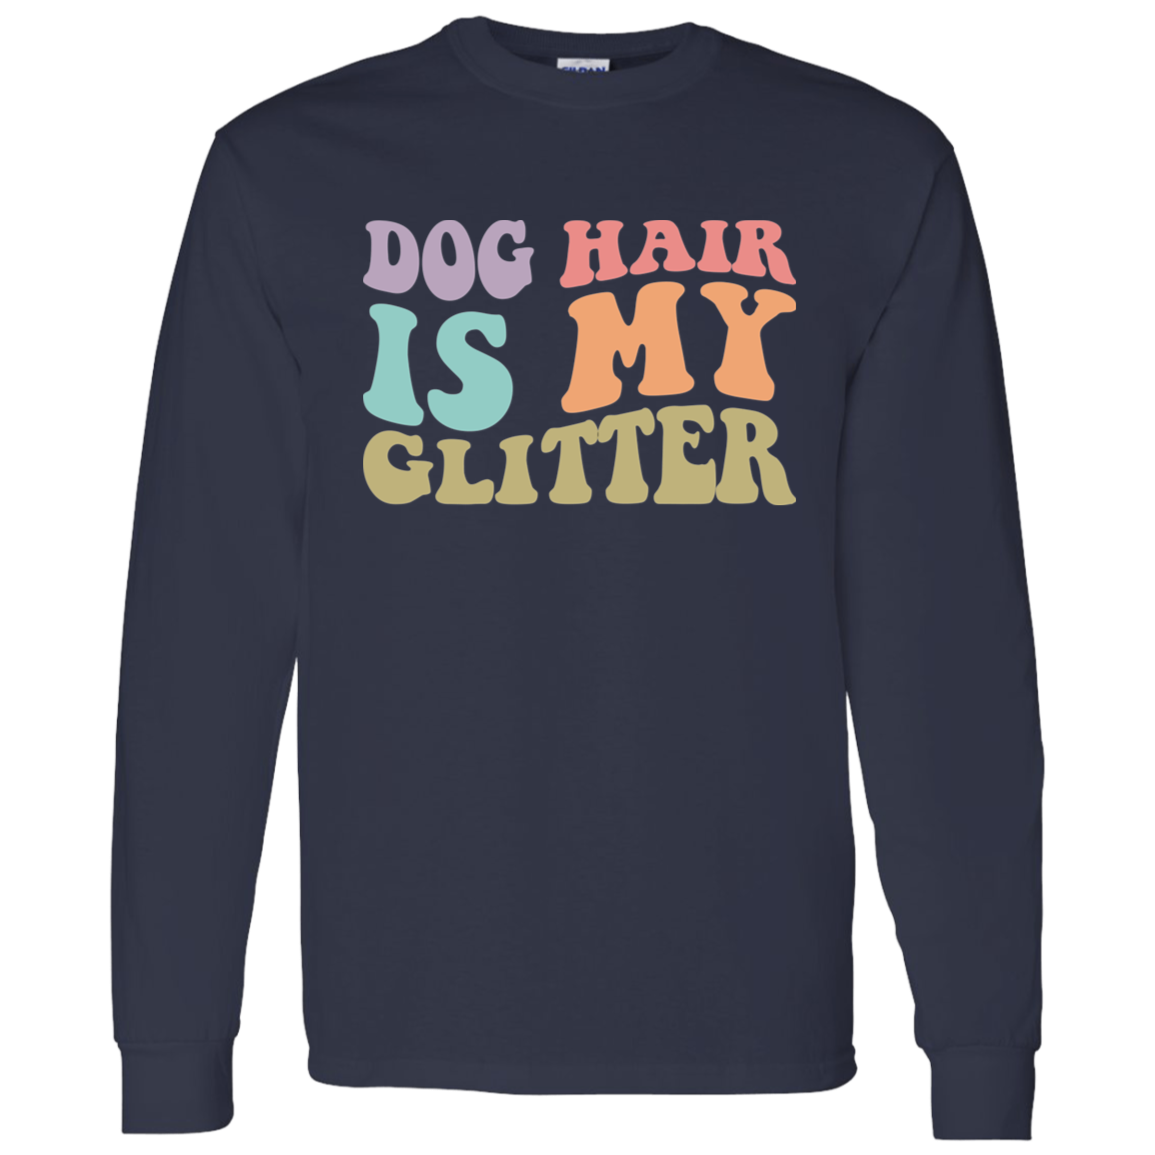 Dog Hair is My Glitter Long Sleeve T-Shirt